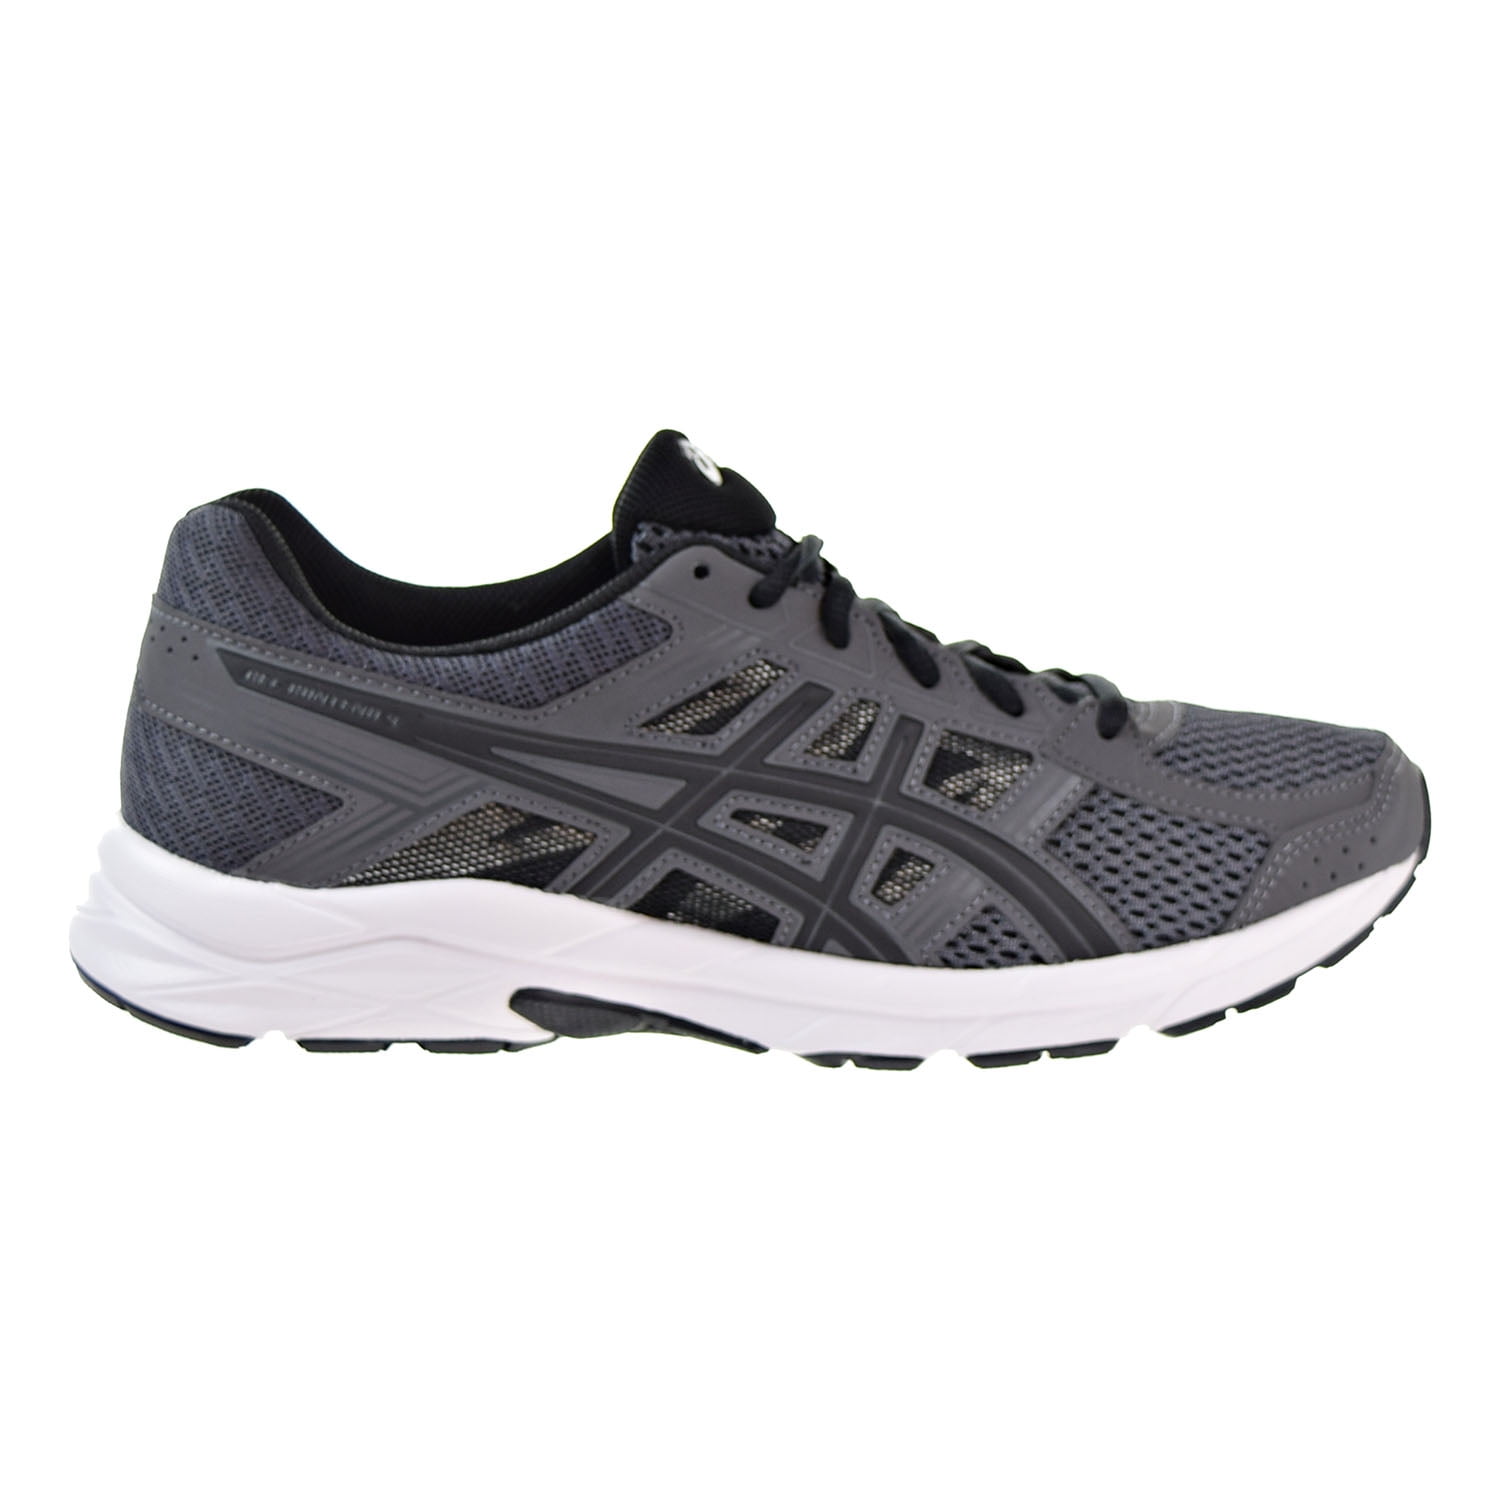 Asics Gel-Contend 4 Men's Shoes Dark Grey/Black/Carbon t715n-9590 ...